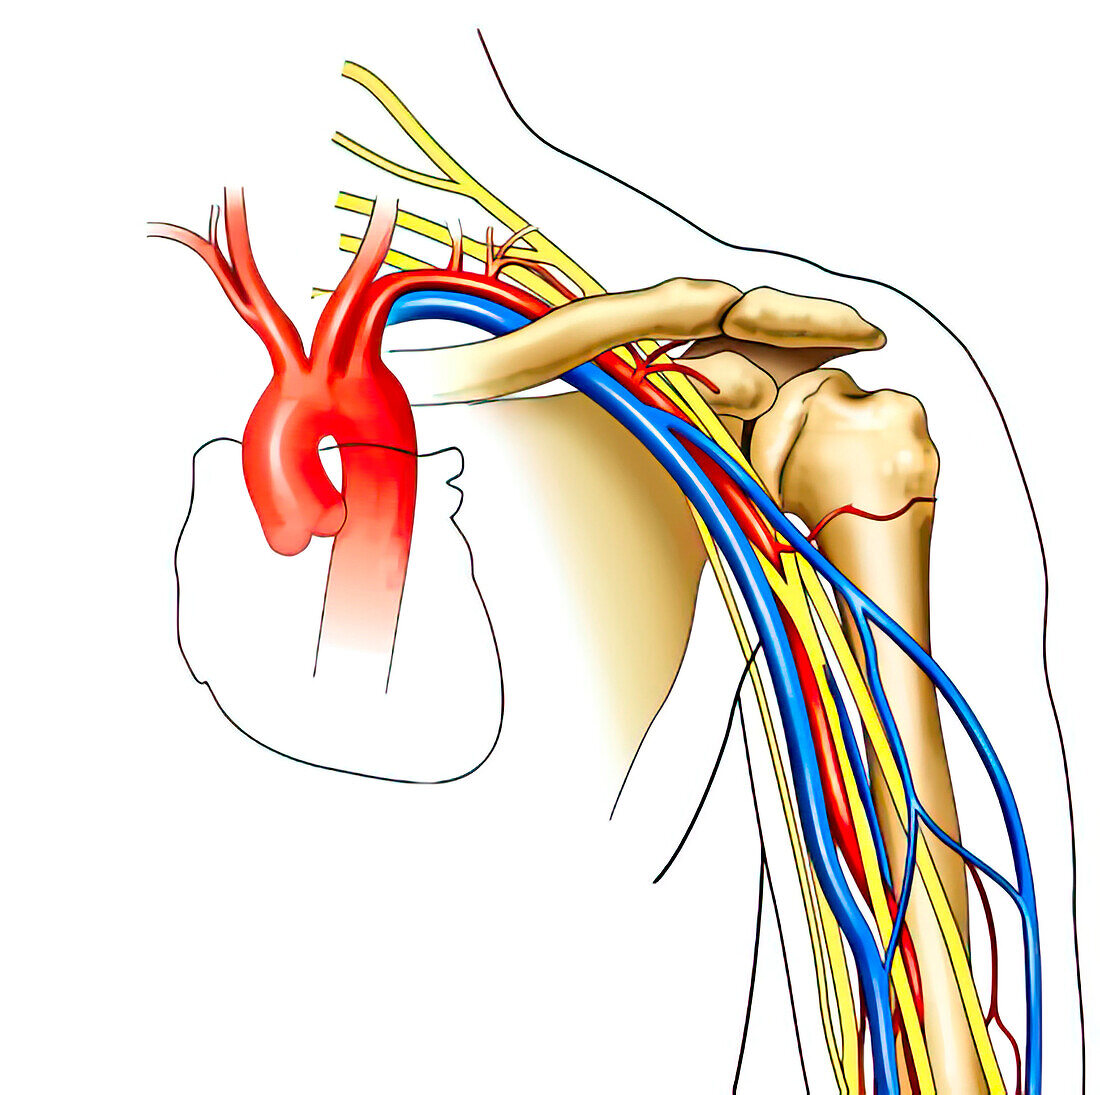 Heart, brachial plexus, illustration